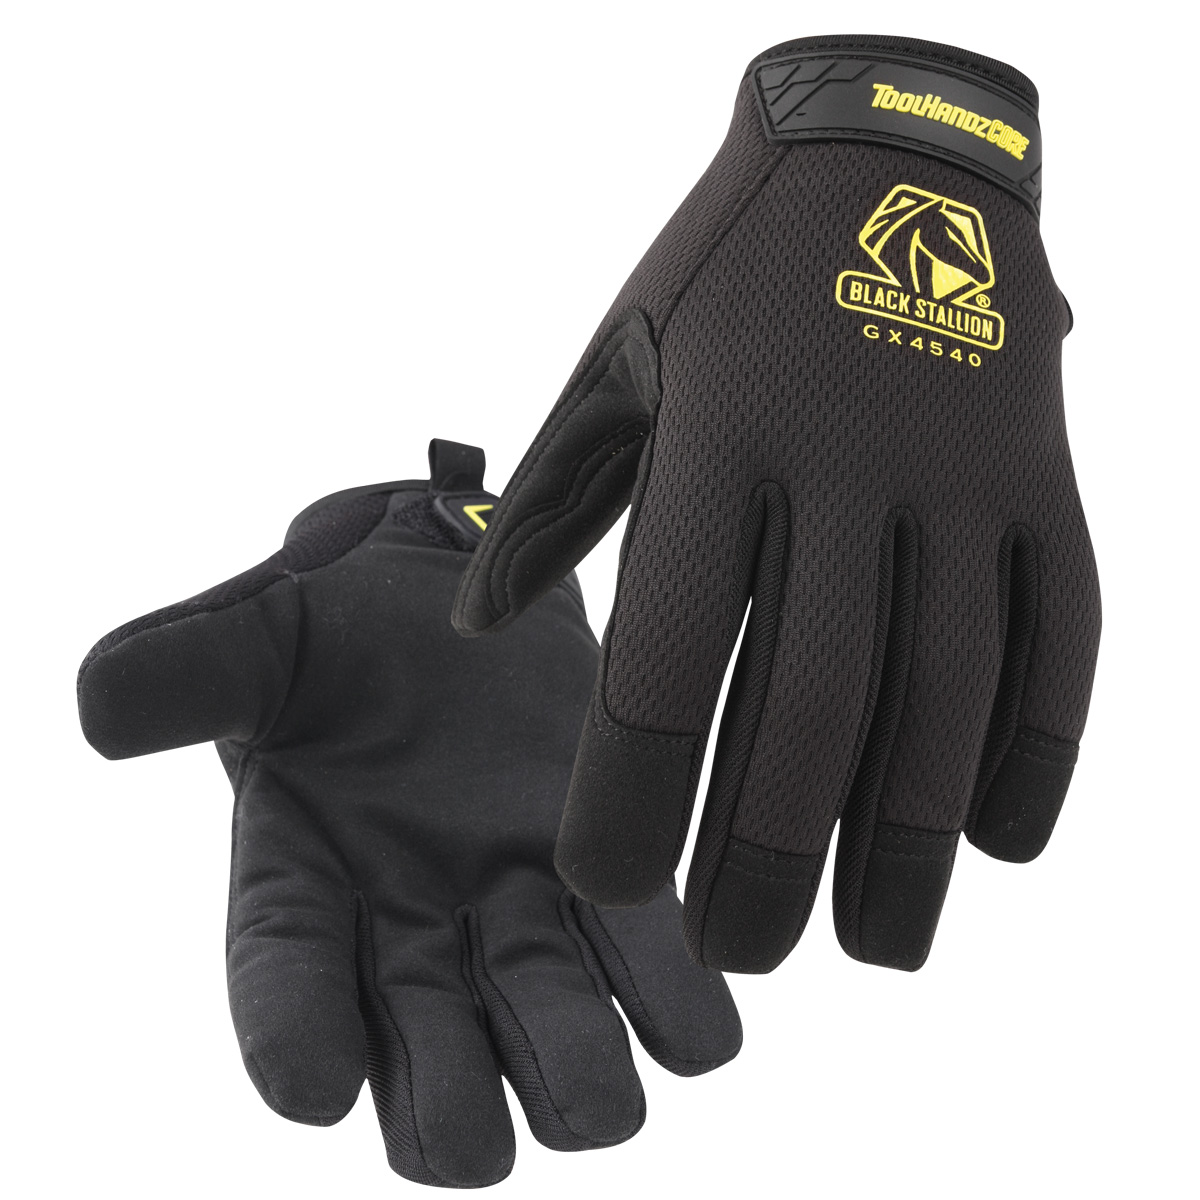 Black Stallion ToolHandz CORE Multiuse Mechanics Gloves from Columbia Safety